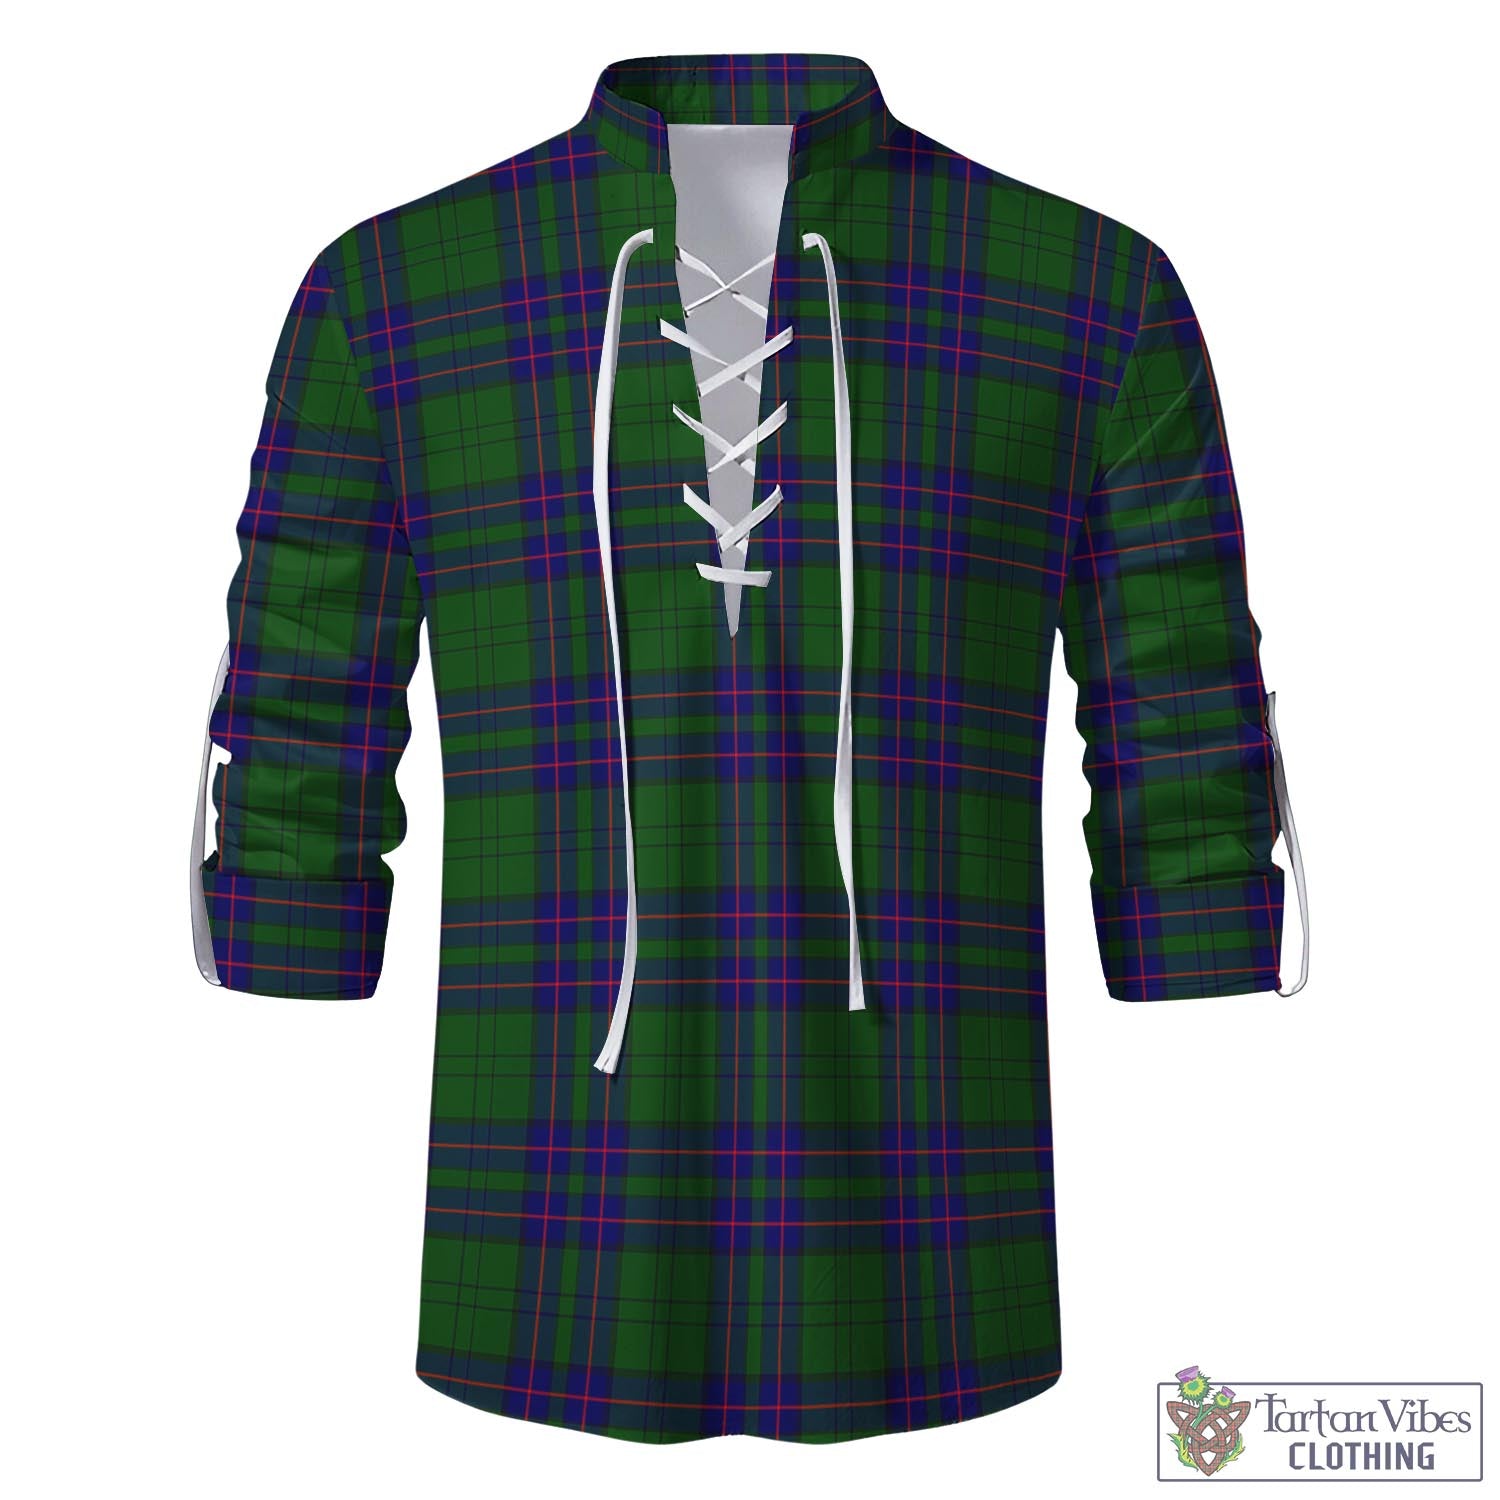 Tartan Vibes Clothing Lockhart Modern Tartan Men's Scottish Traditional Jacobite Ghillie Kilt Shirt